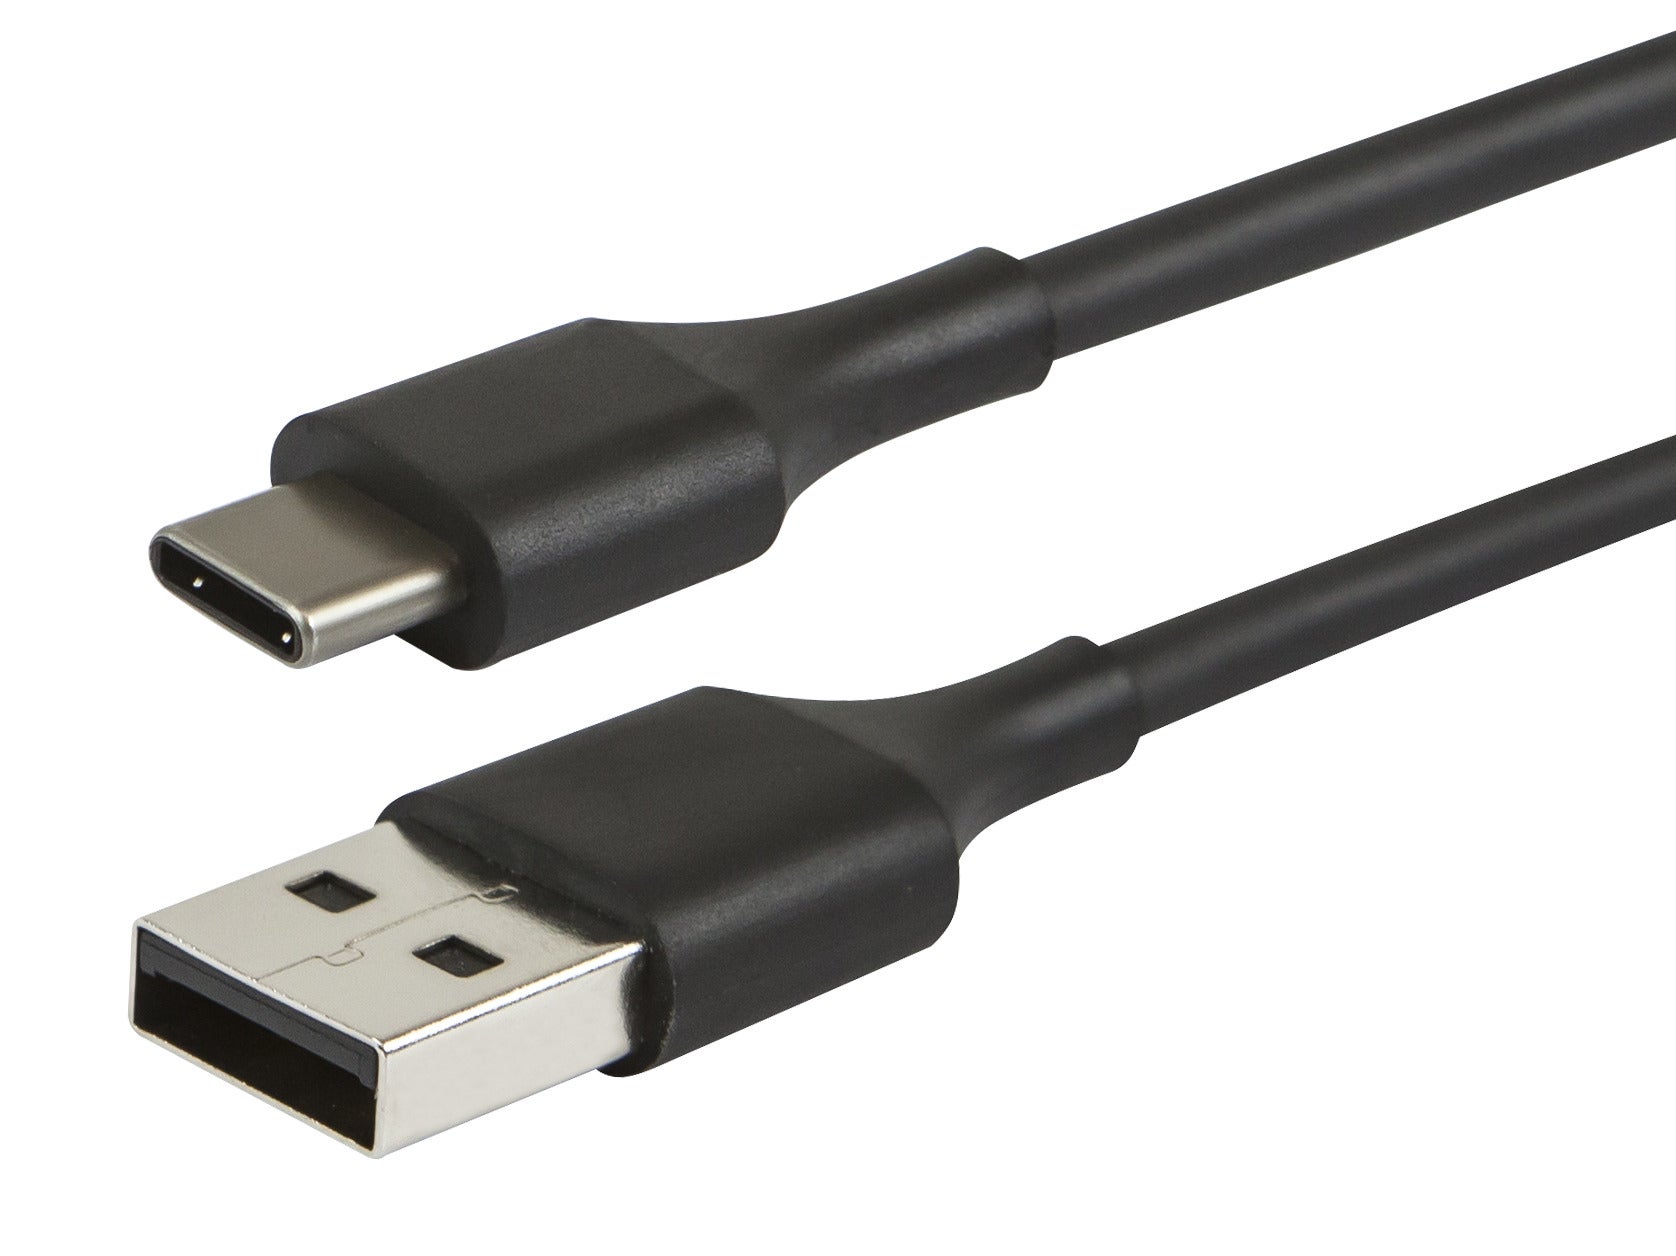 Monoprice undercuts Apple with $10 USB-C cables | Macworld